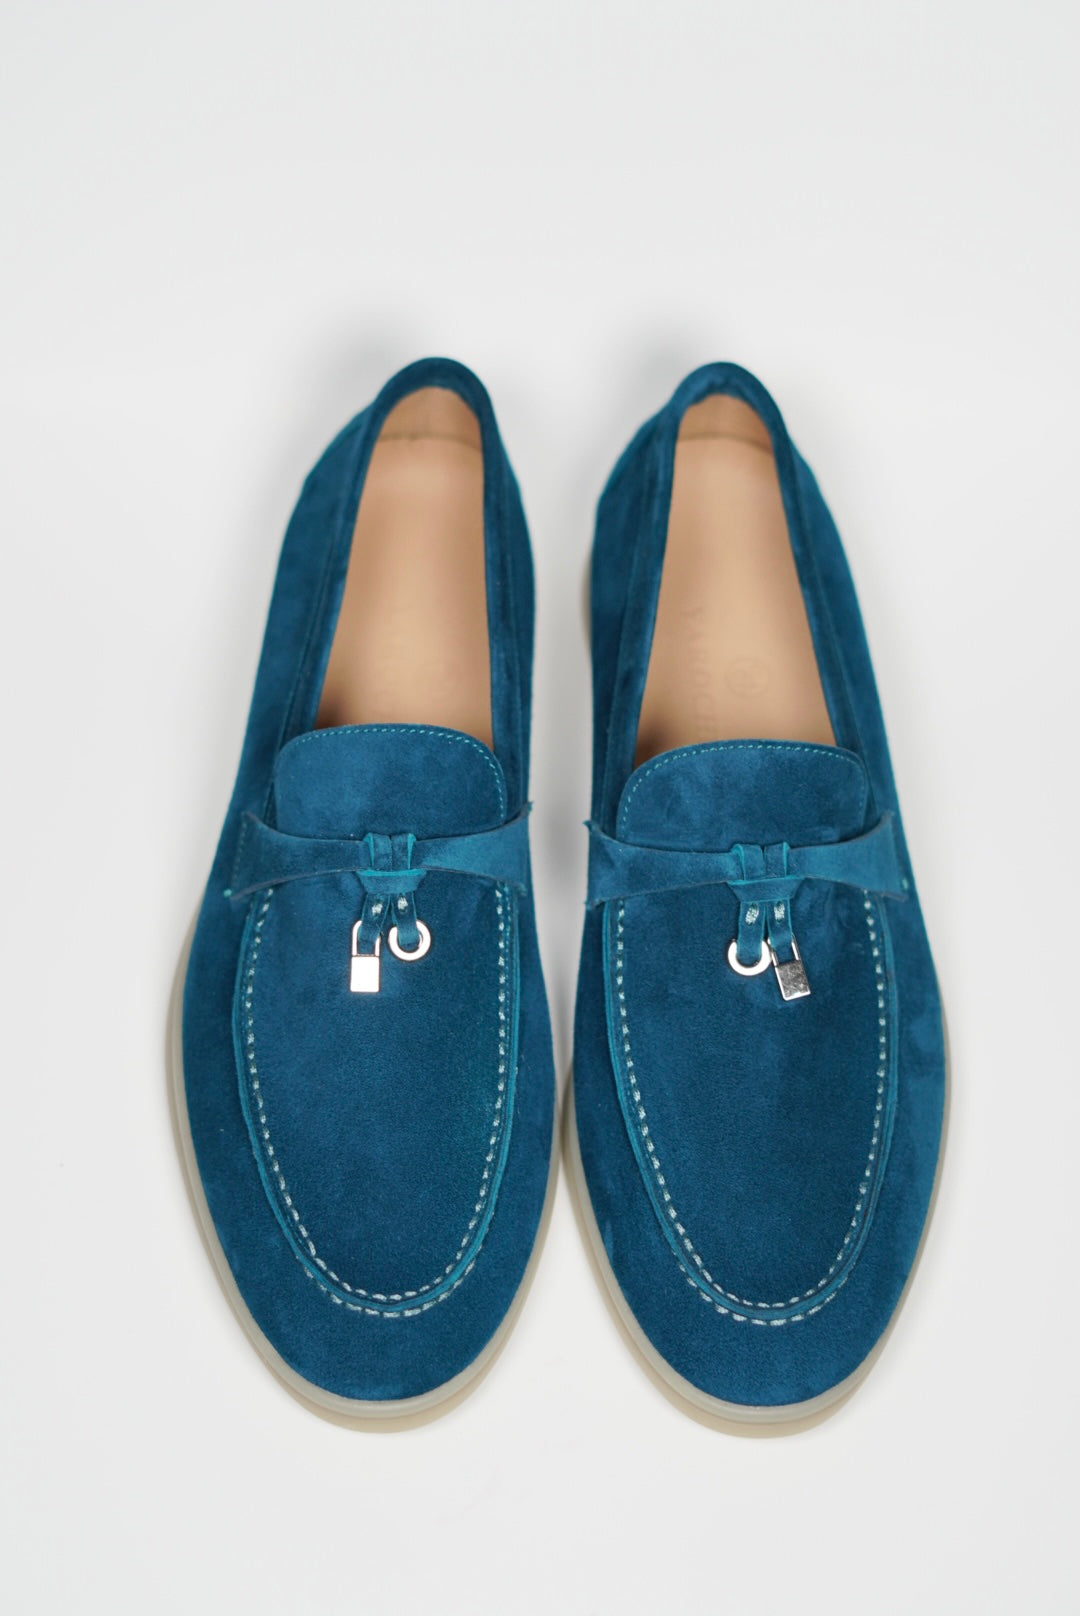 Women's Genuine Suede Loafers Moccasins Aquamarine